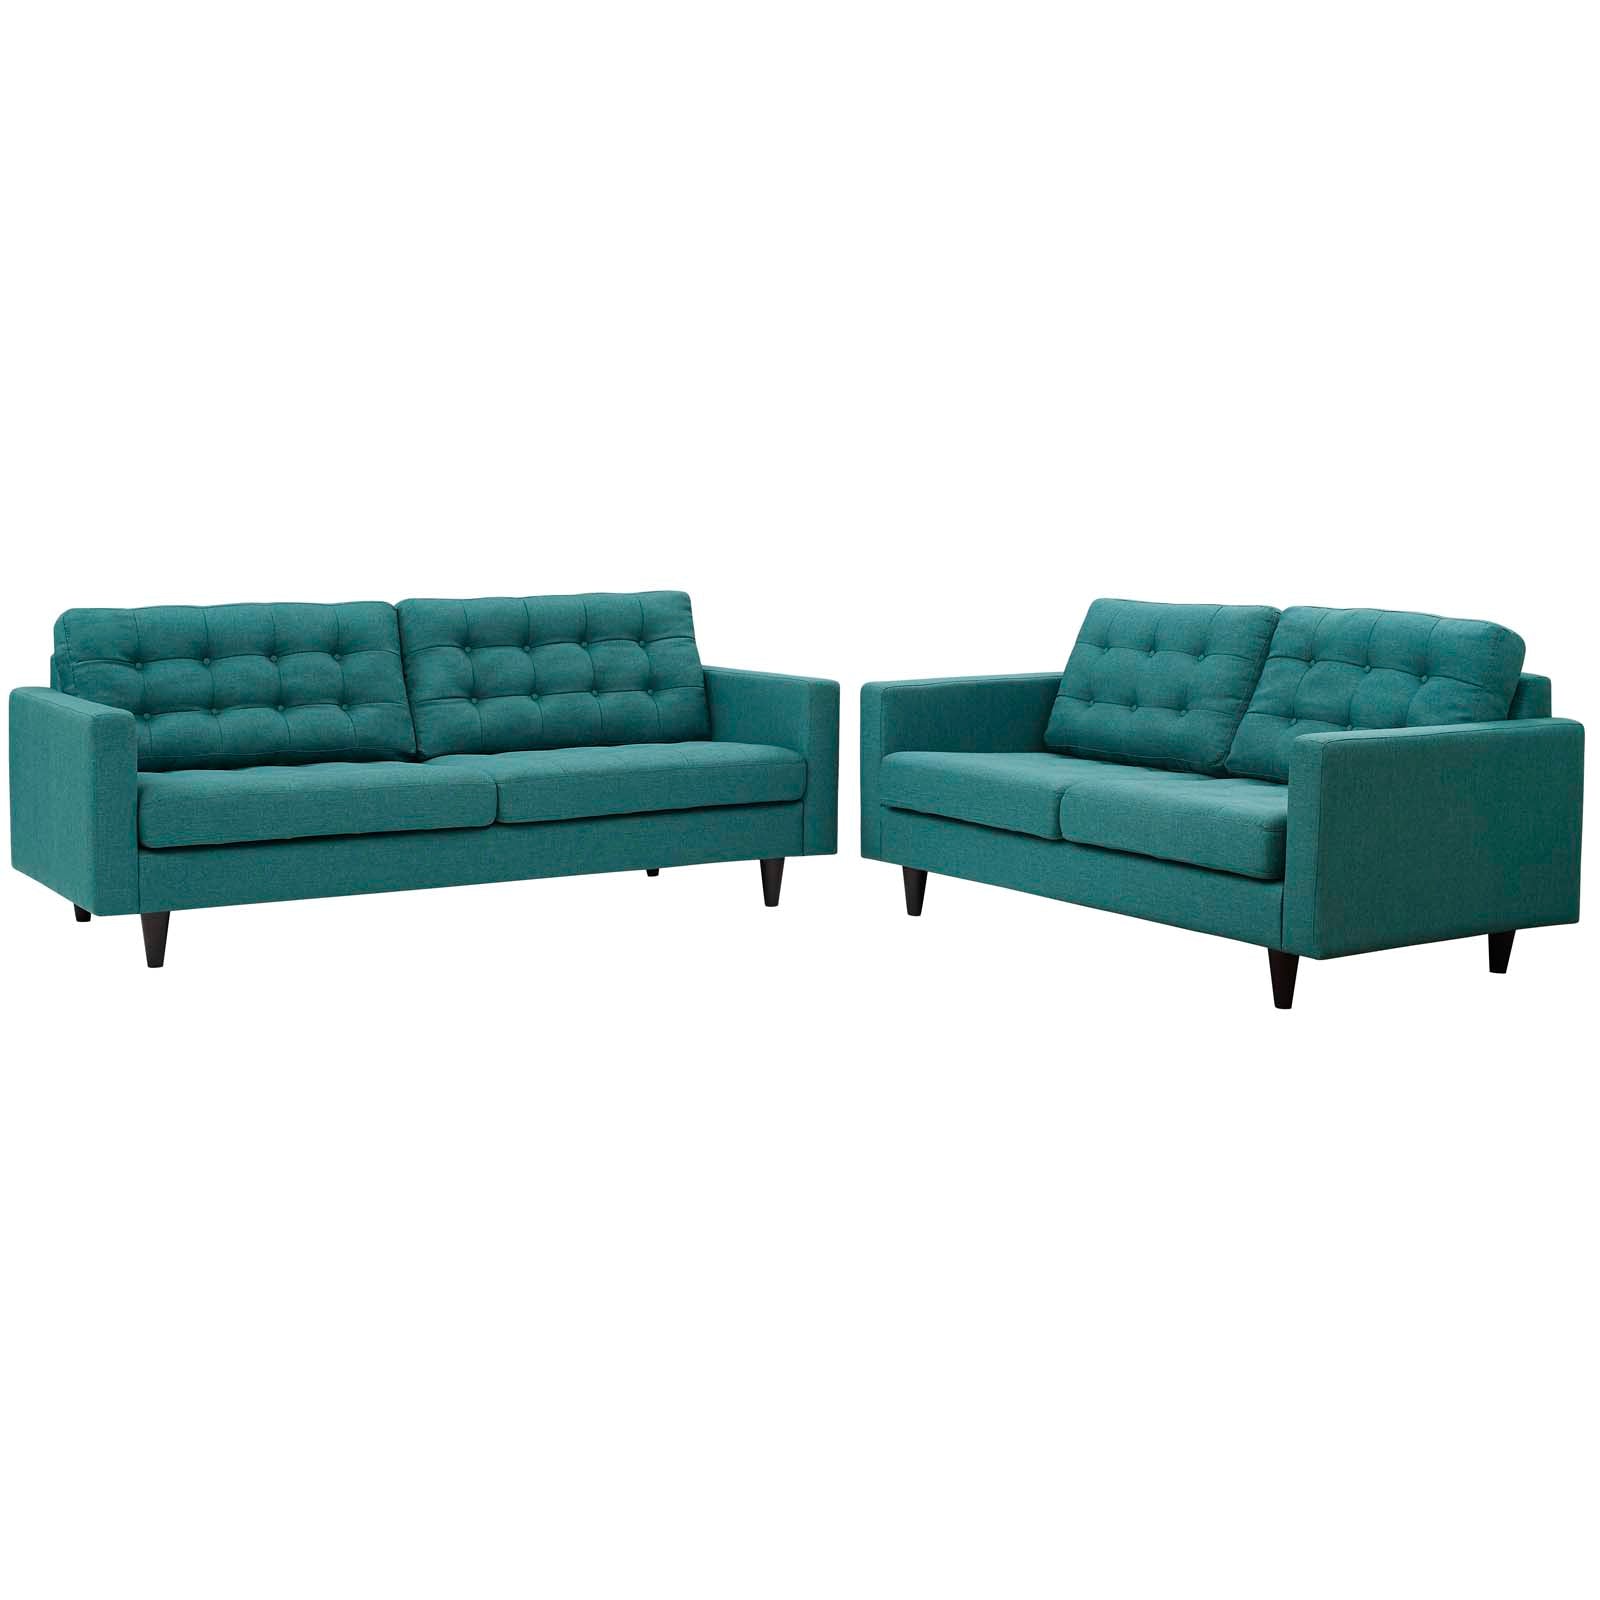 Modway Living Room Sets - Empress Sofa And Loveseat Set Of 2 Teal